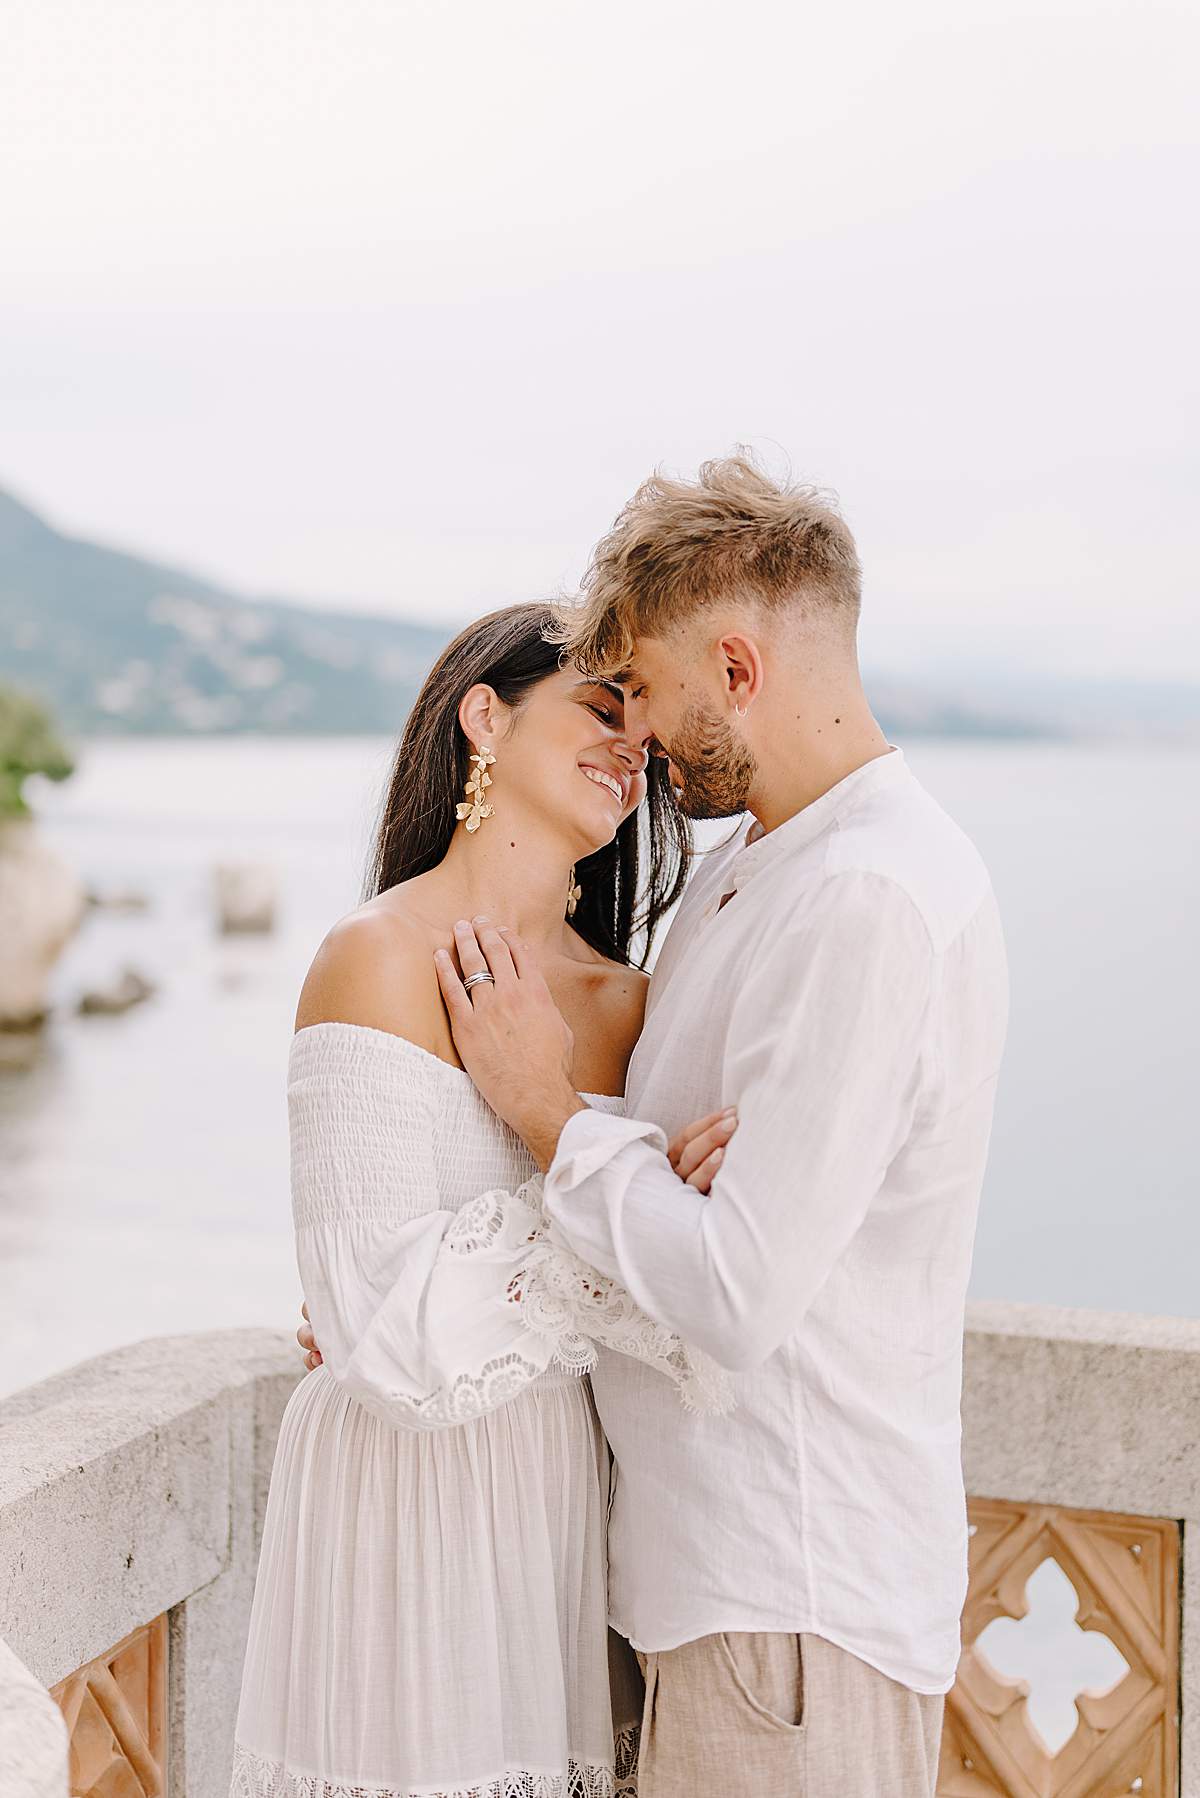 Destination-wedding-photographer-abruzzo-italy-venice-romantic-engagement-couple-session-miramare-castle